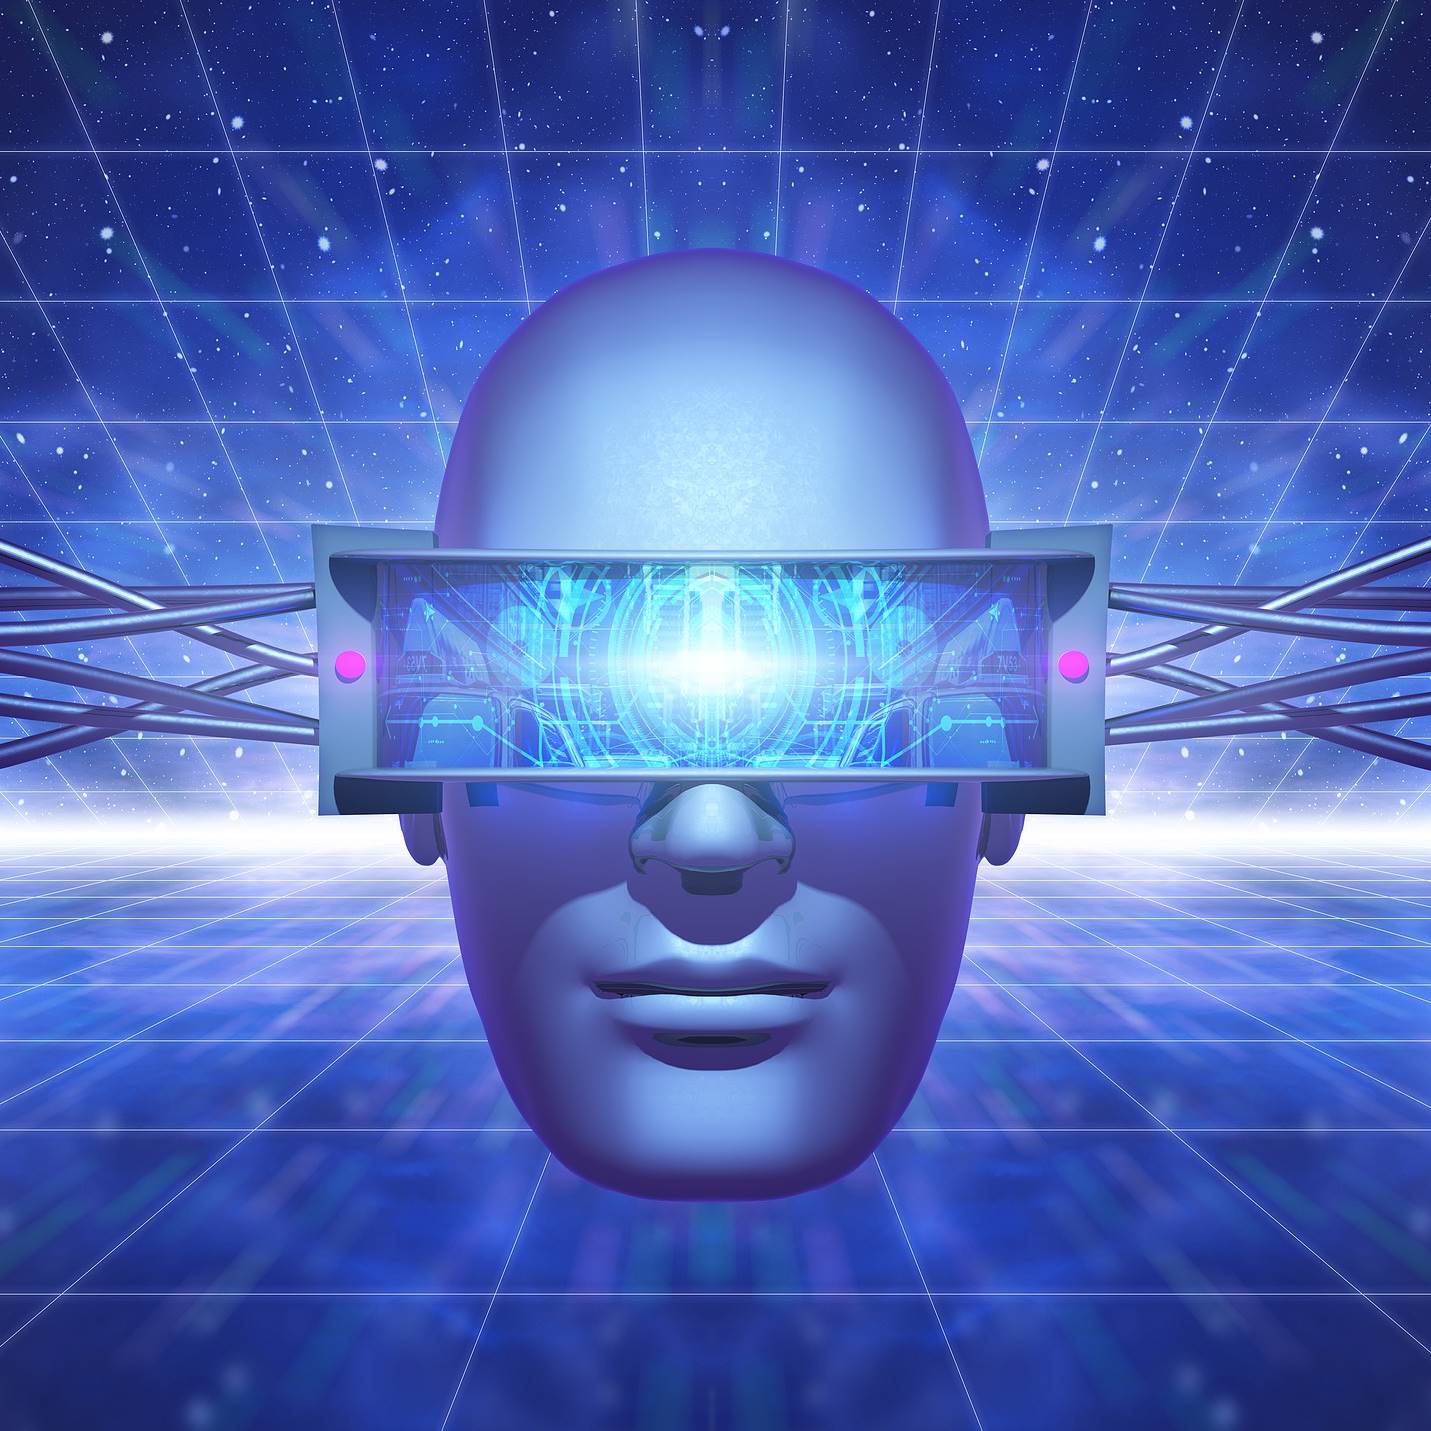 Experiență VR Cadou - Inchiriere ochelari VR  | 2 zile, 1 echipament , smartexperience.ro